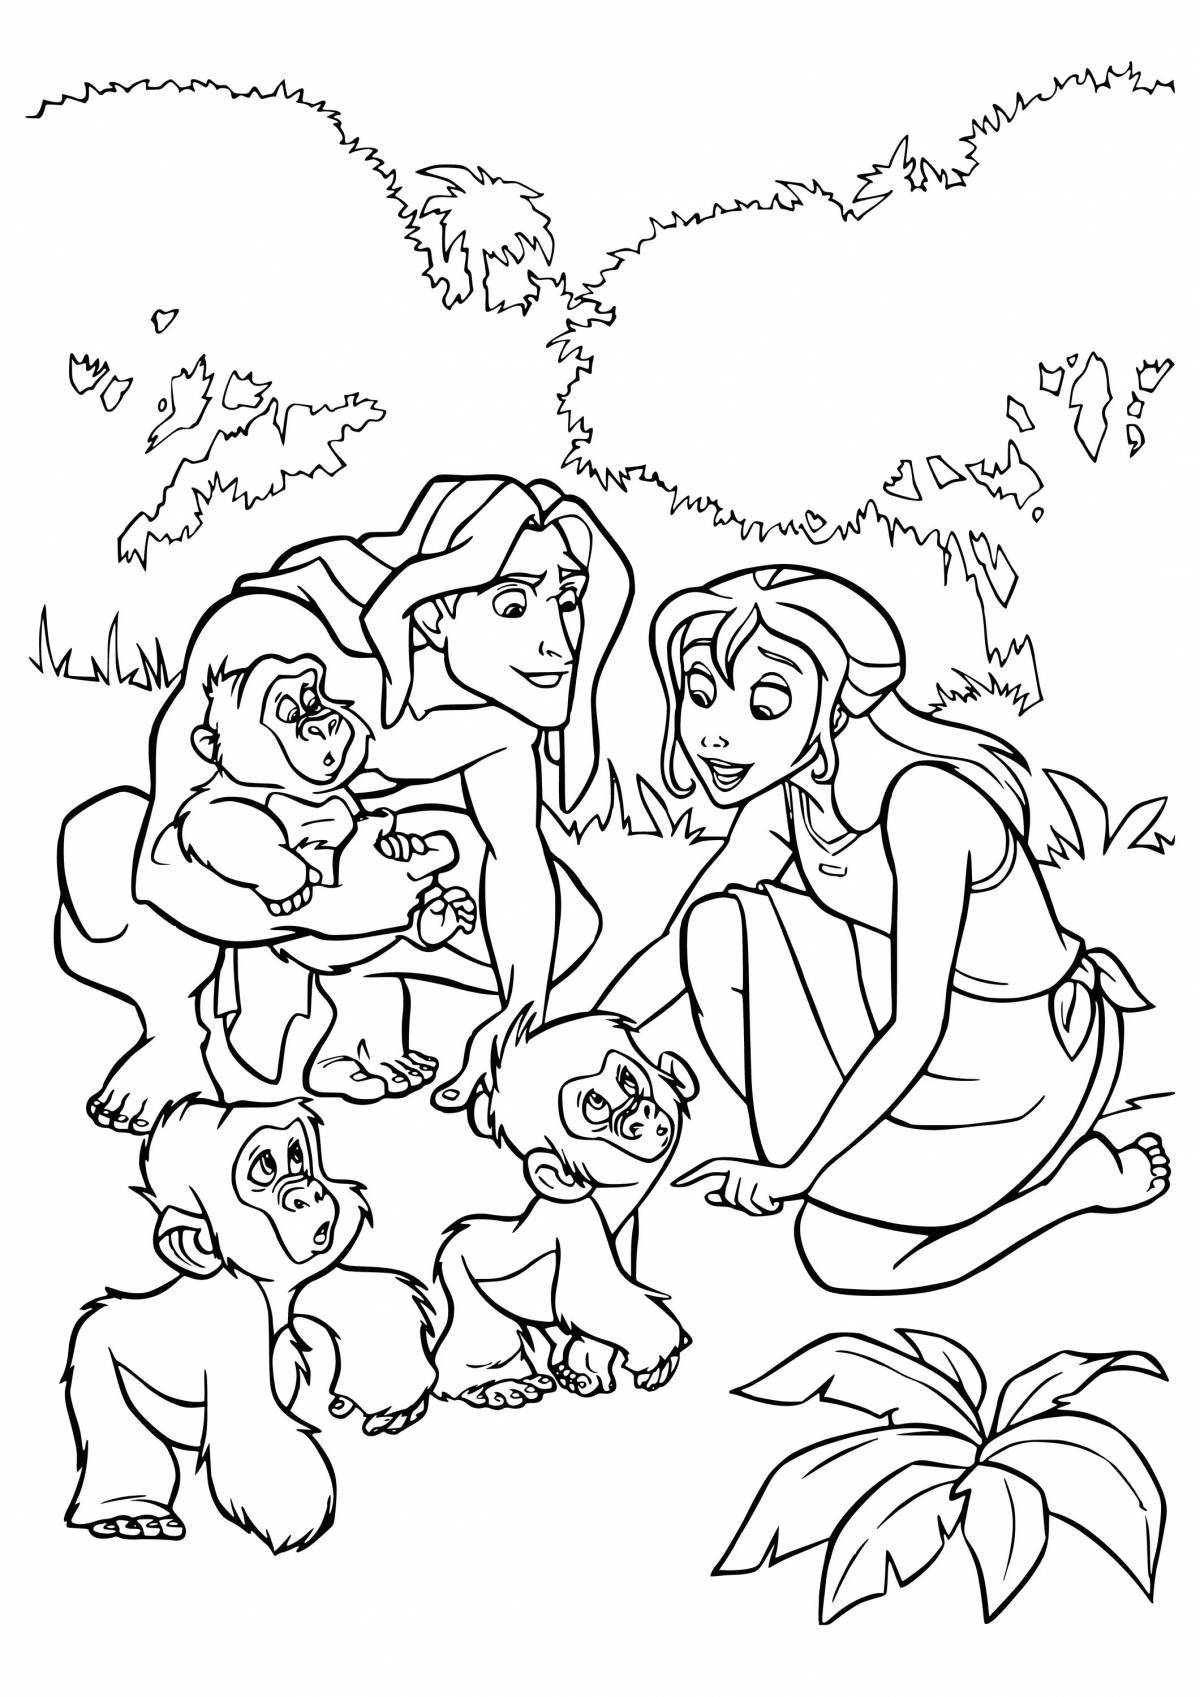 Joyful cave club coloring page